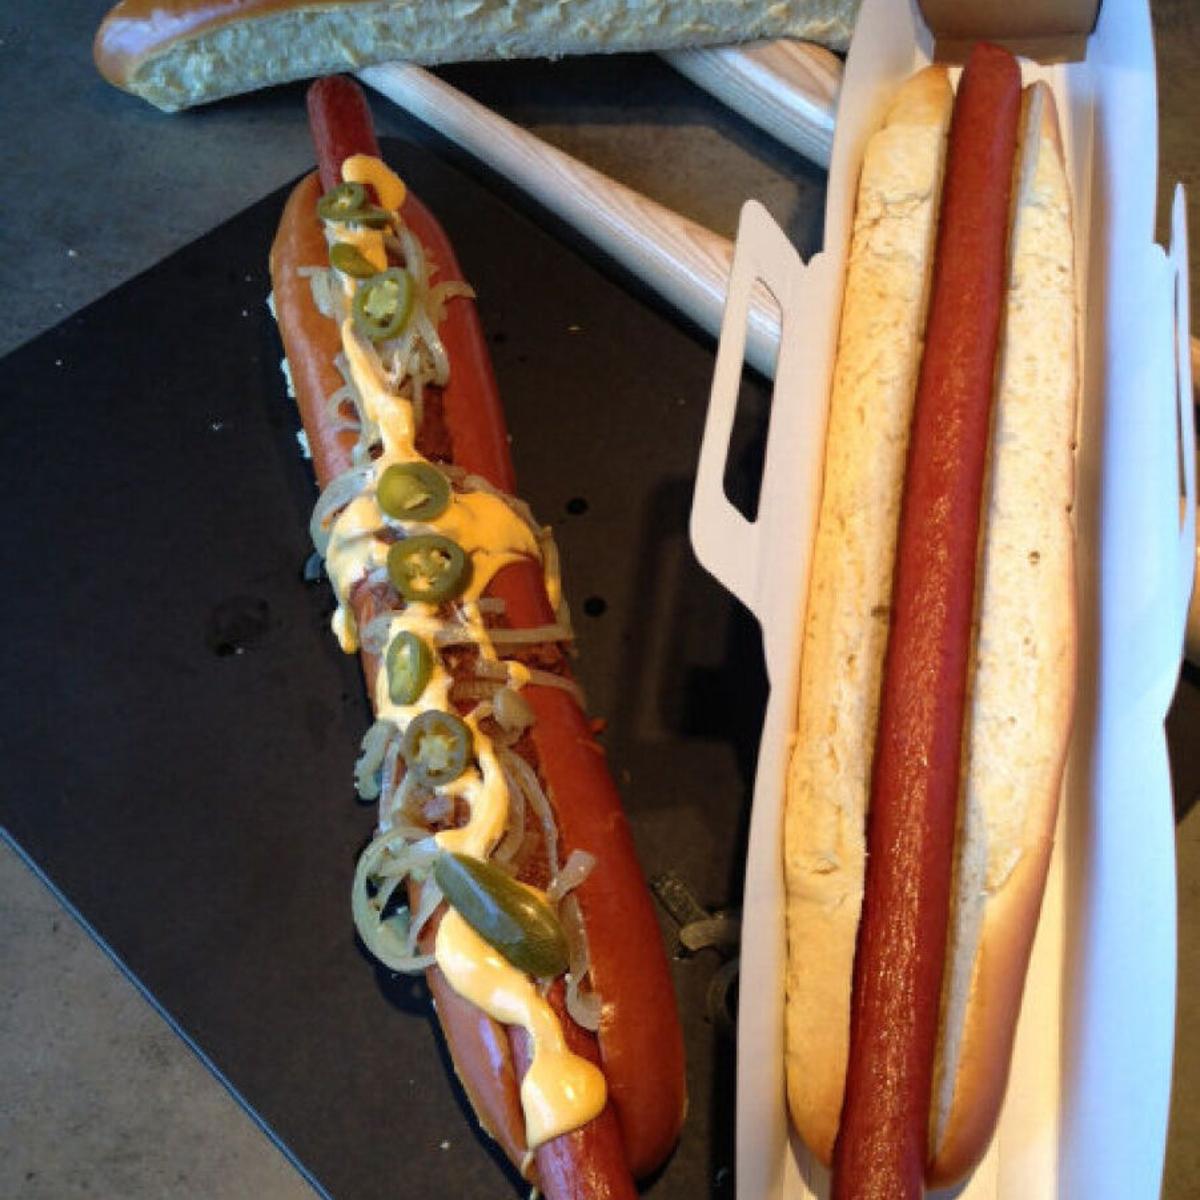 texas rangers boomstick hot dog